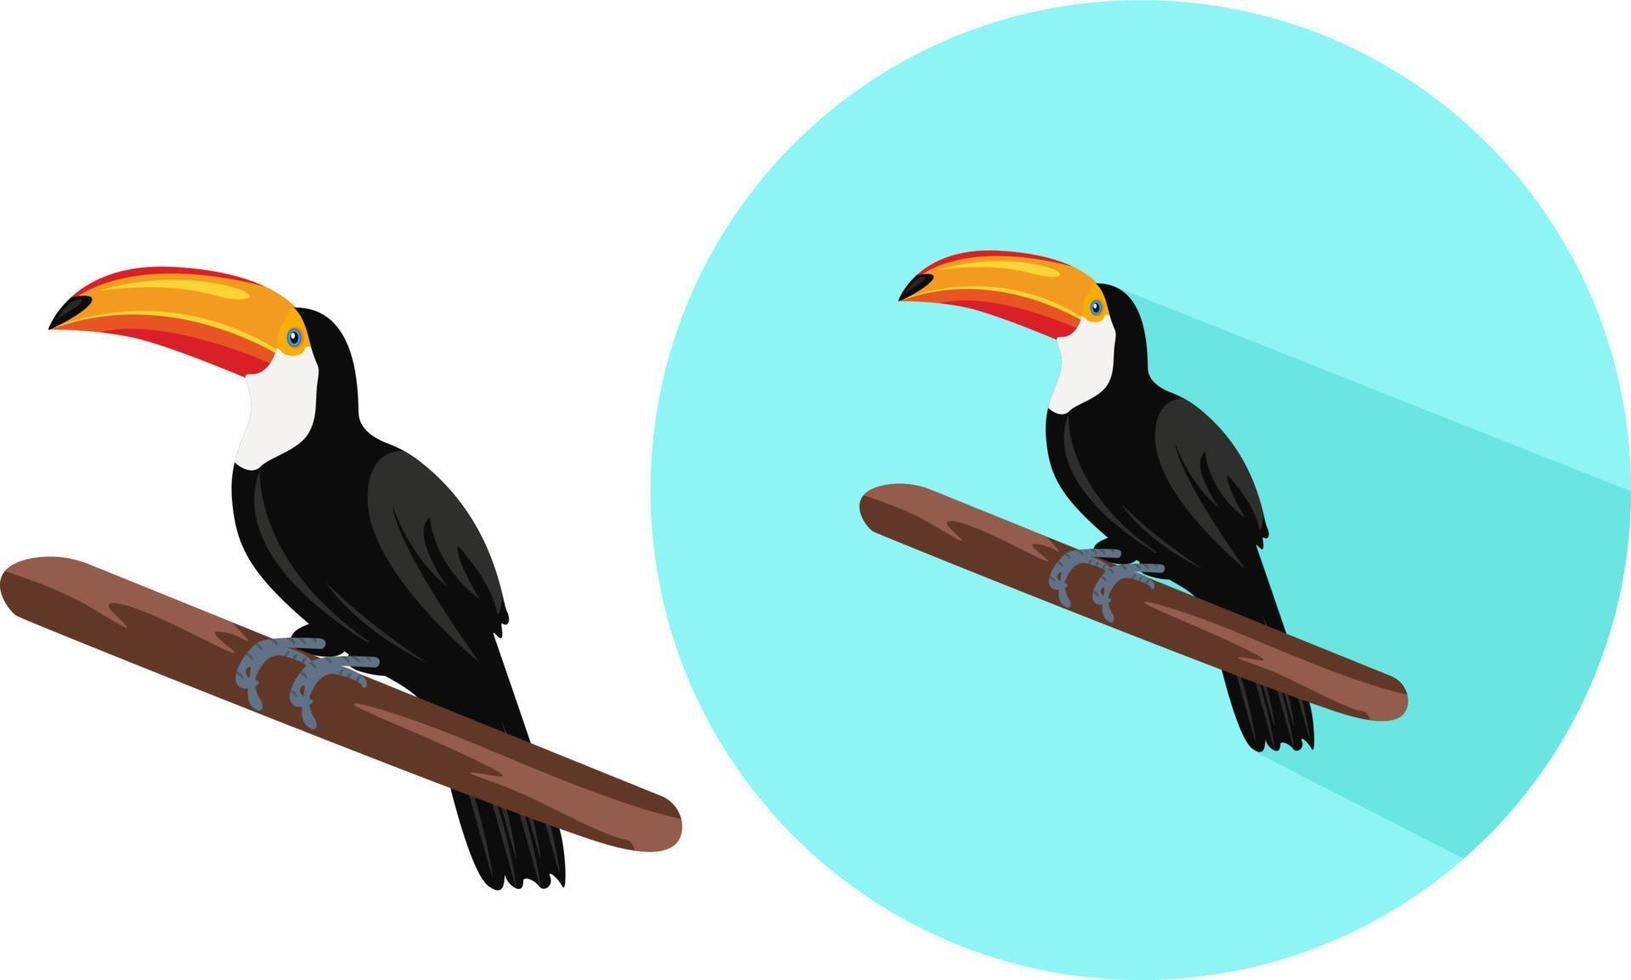 Toucan bird ,illustration, vector on white background.